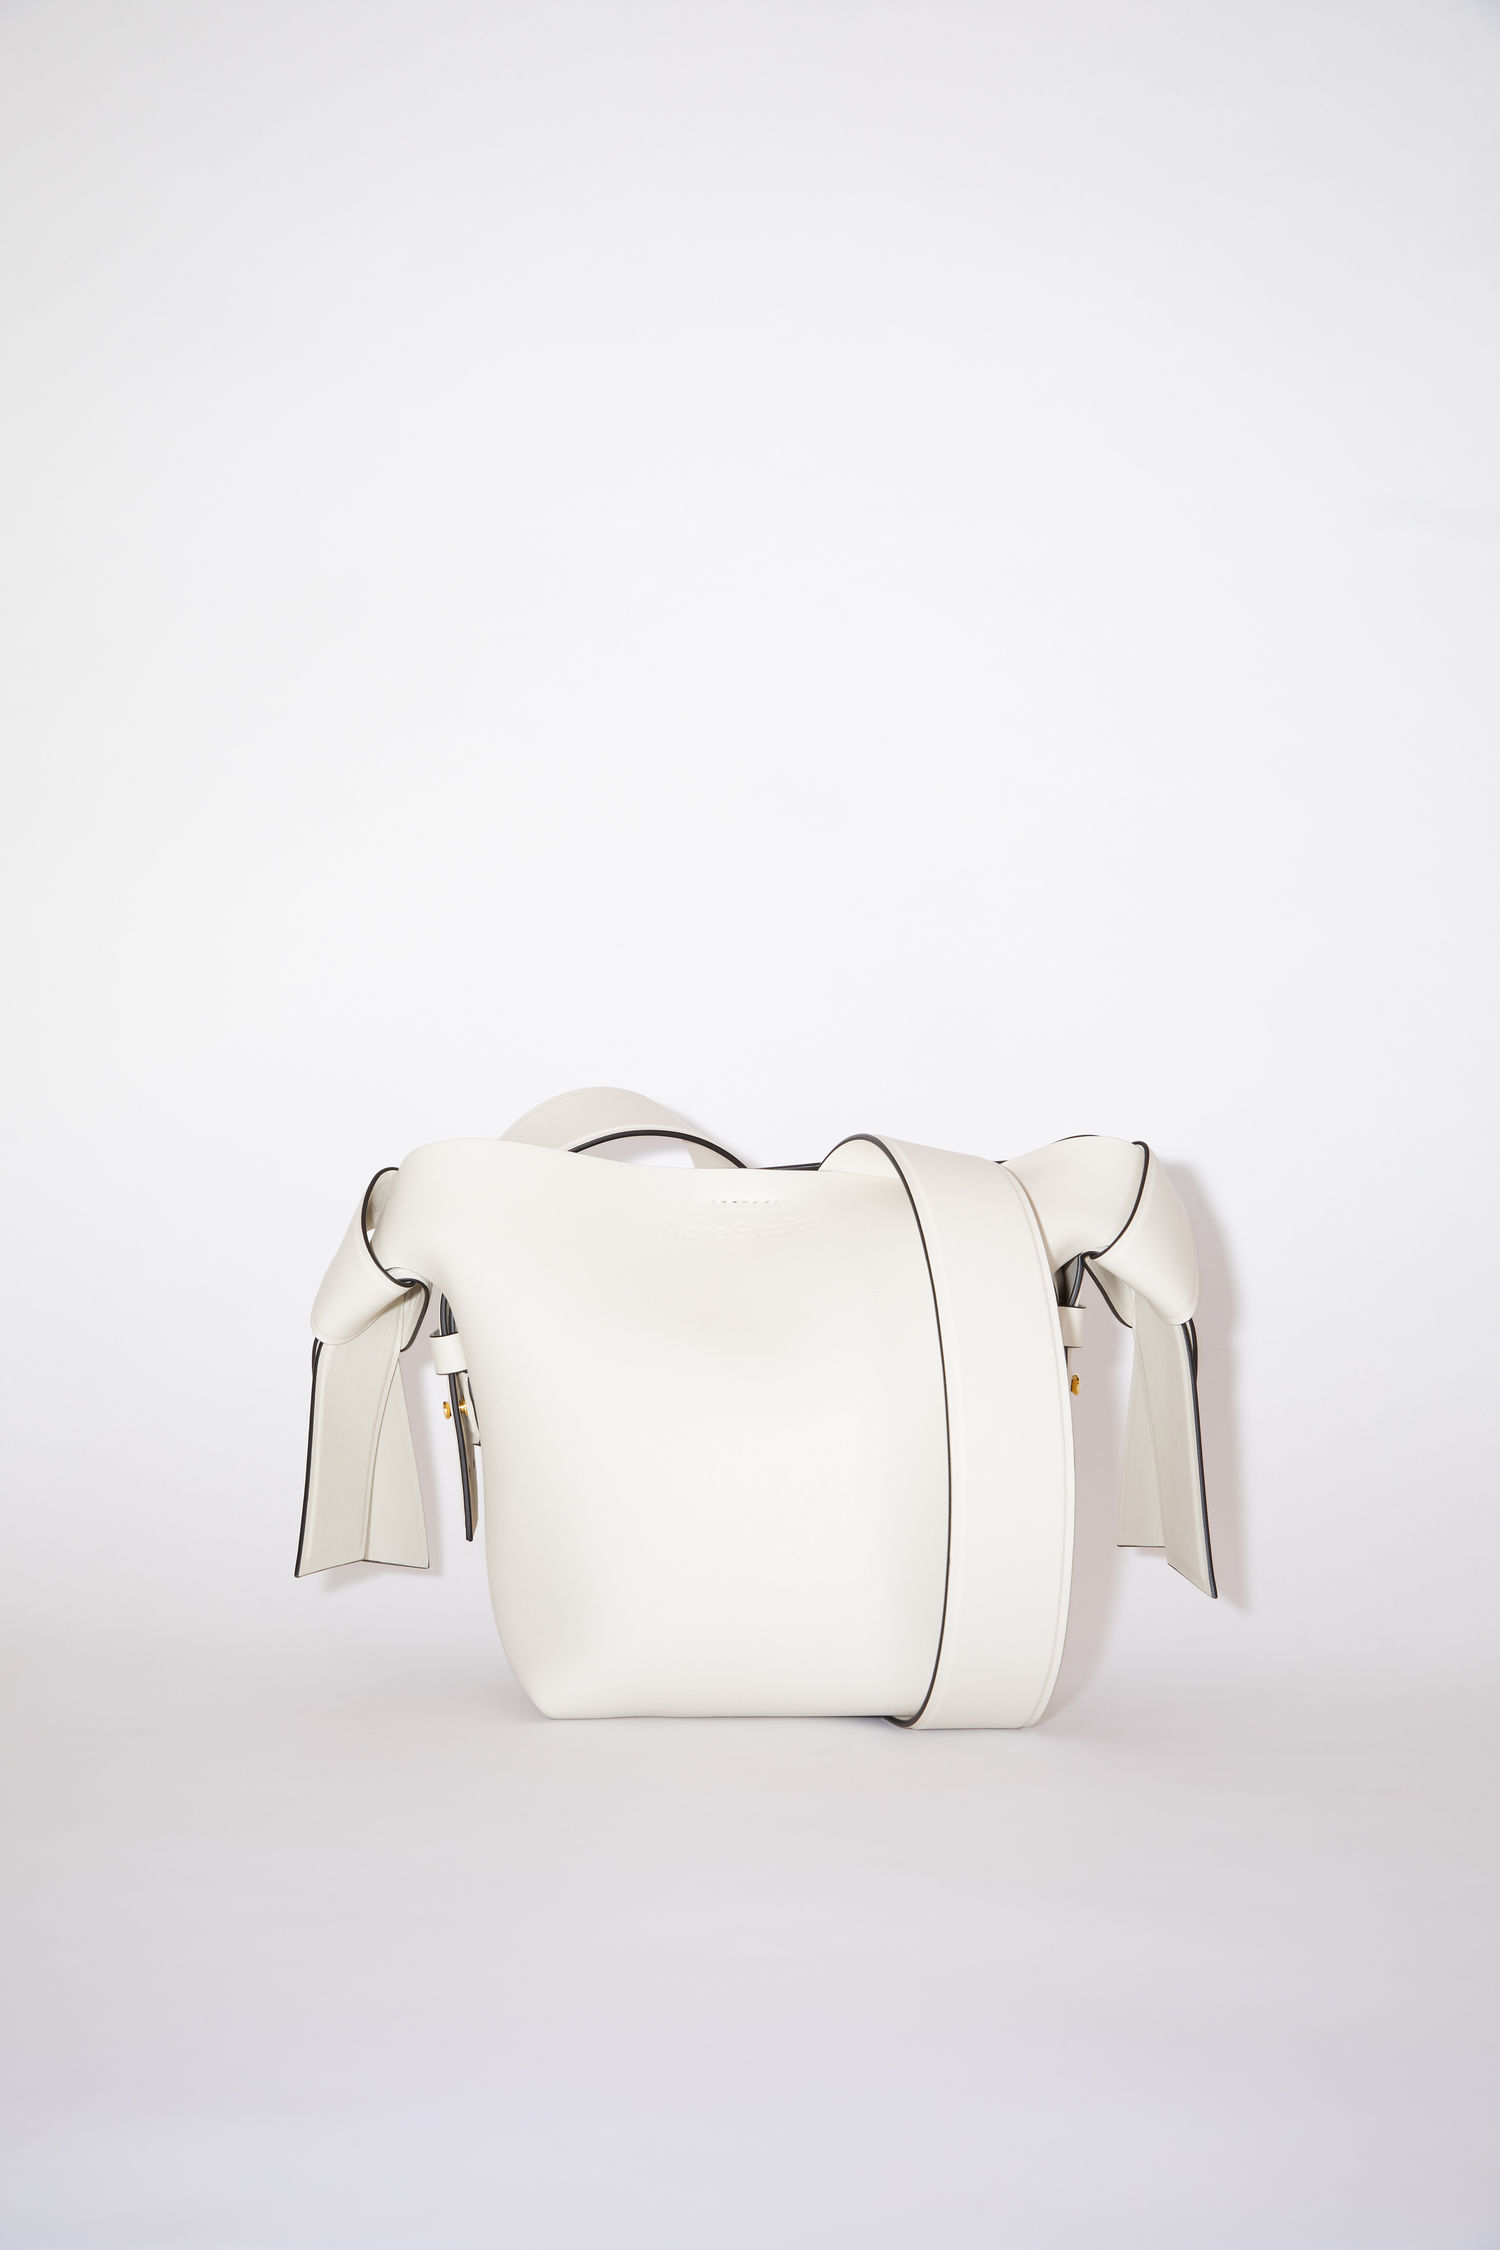 Acne Studios - Mini shoulder bag - White/black